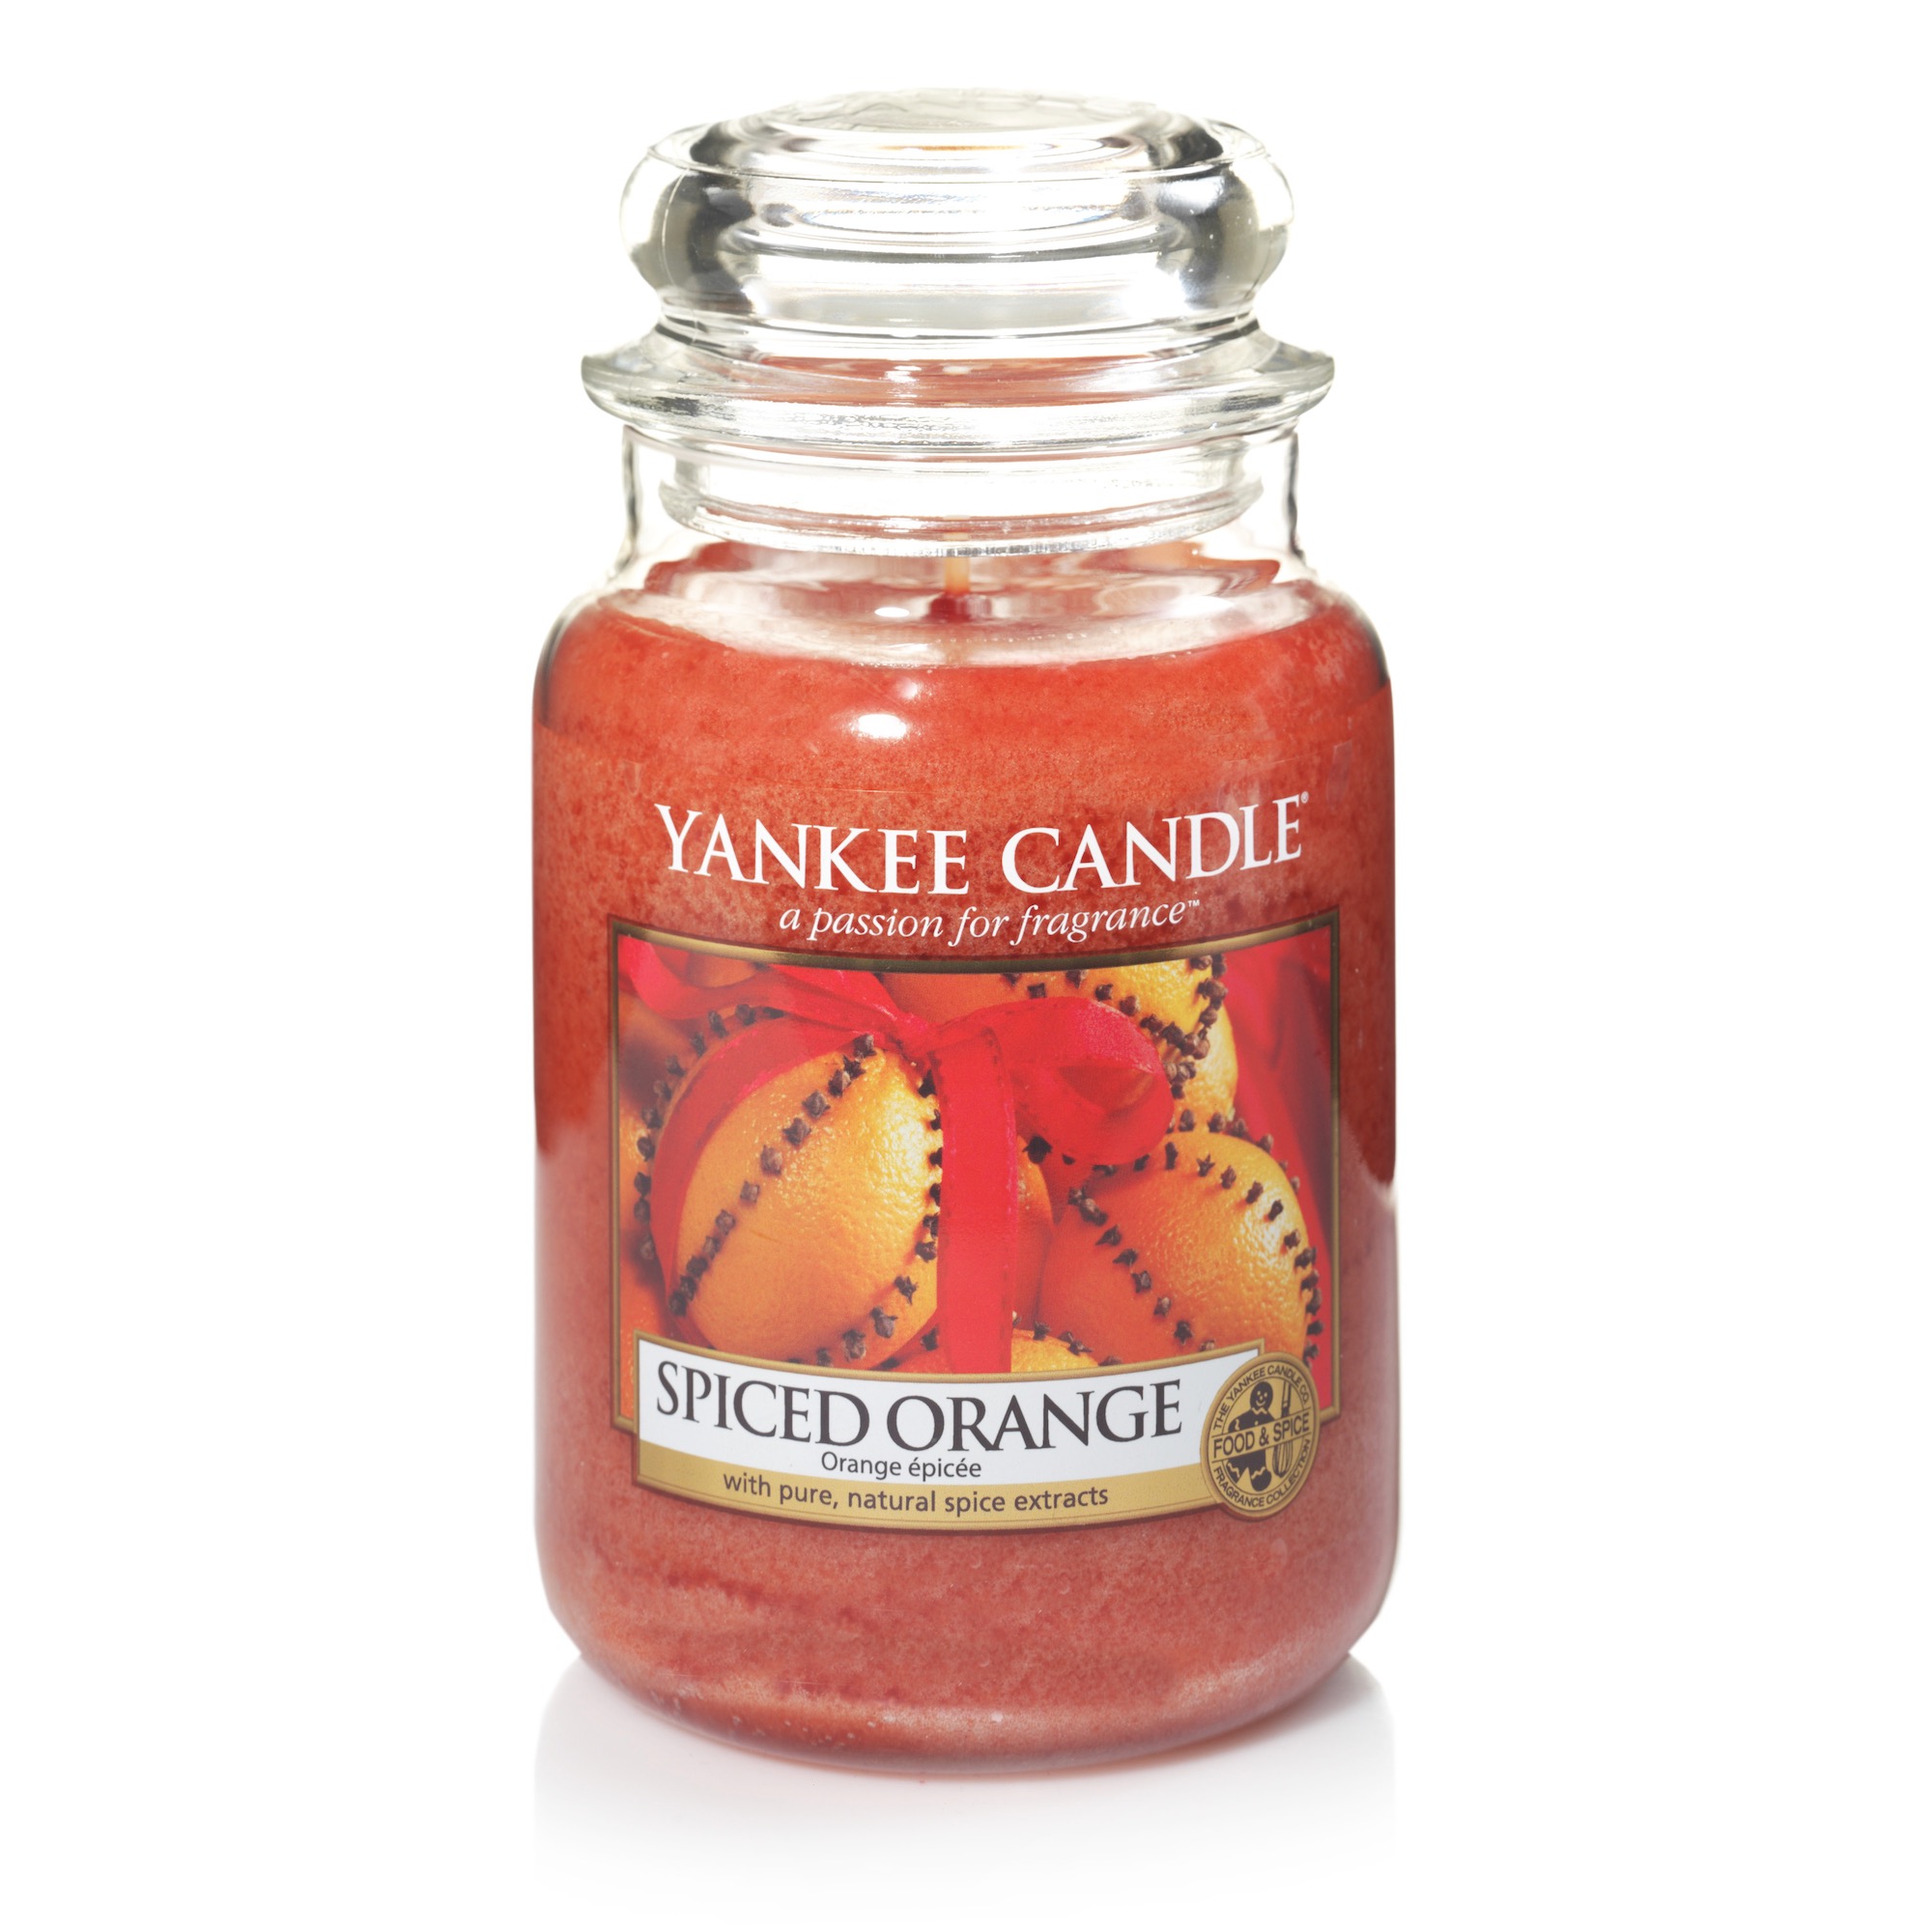 Spiced Orange Housewarmer Large Jar by Yankee Candle - 1188030E